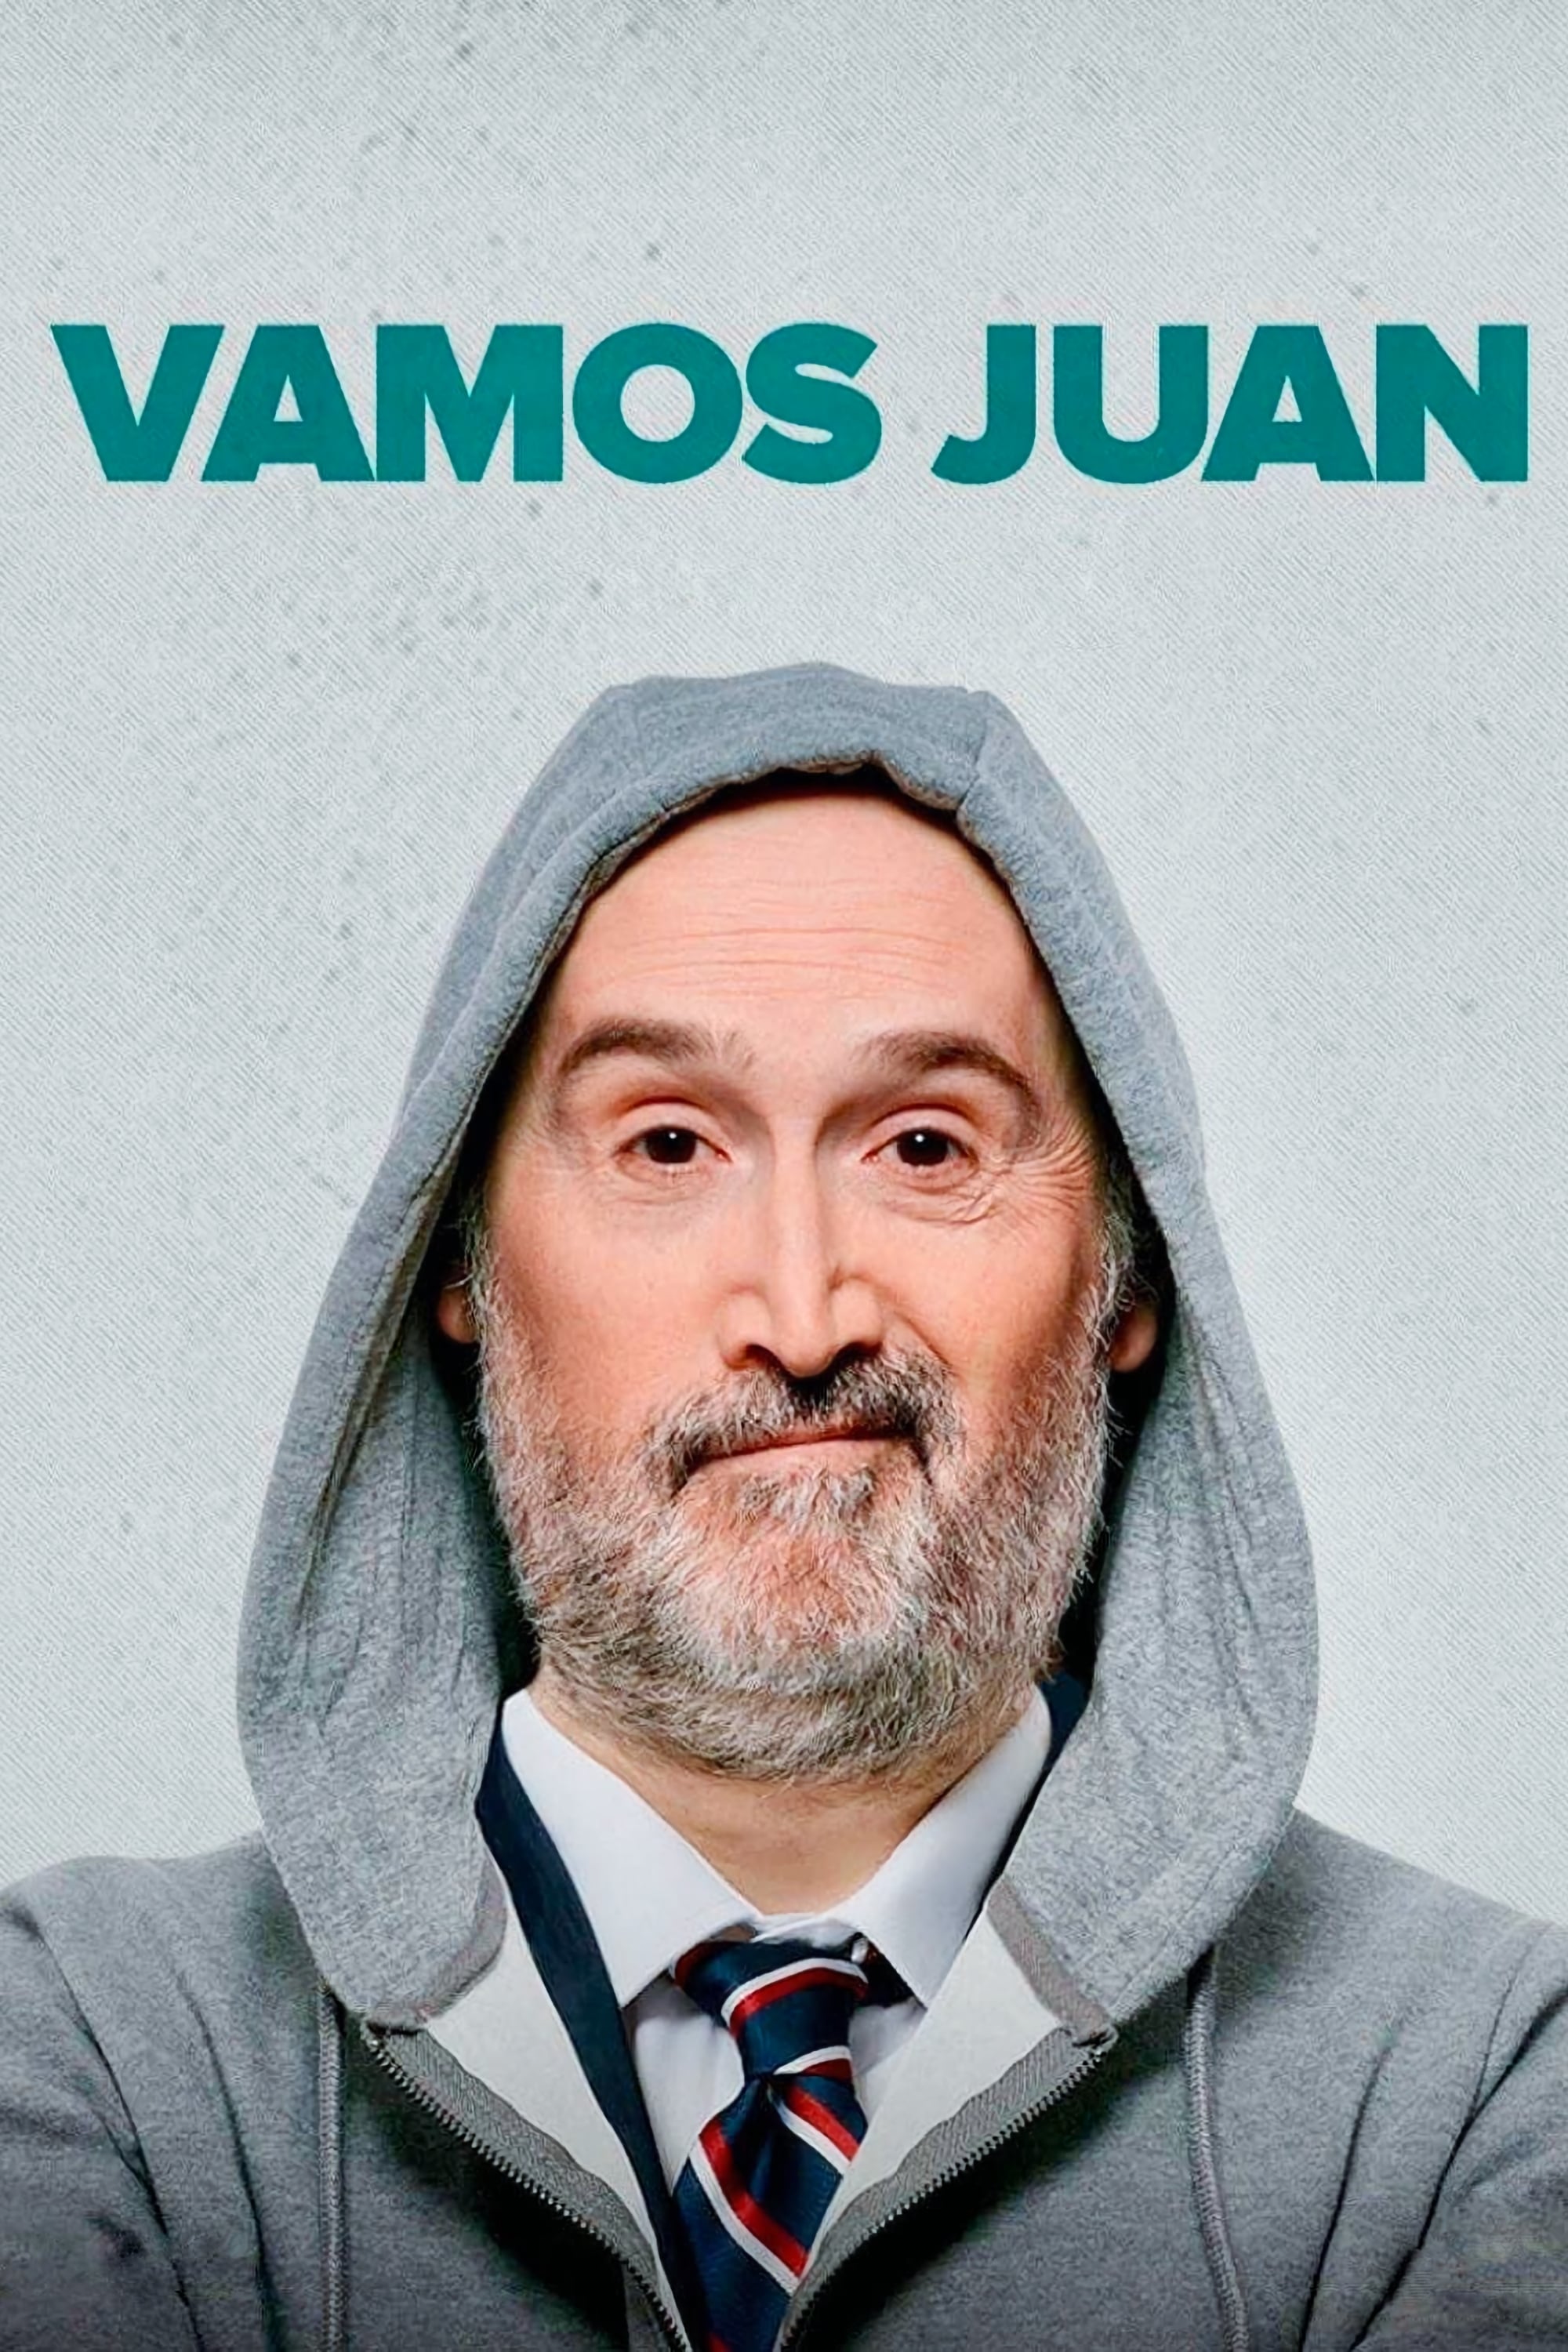 Vamos Juan TV Shows About Power Politics